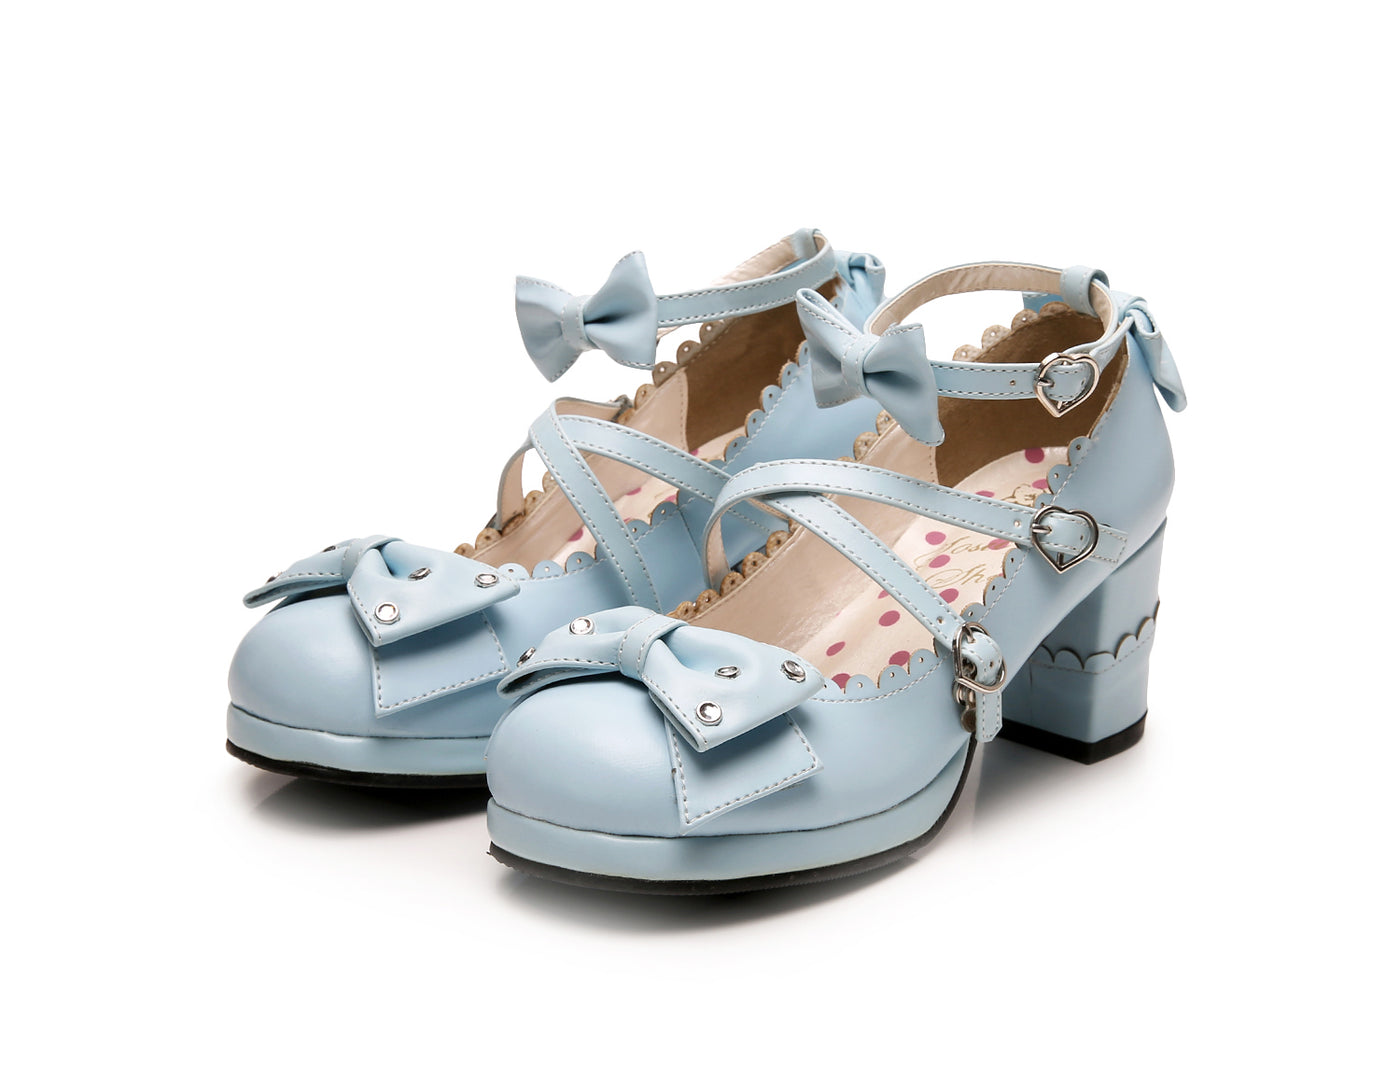 Sosic~Sweet Lolita High Heel Handmade Shoes 34 light blue 